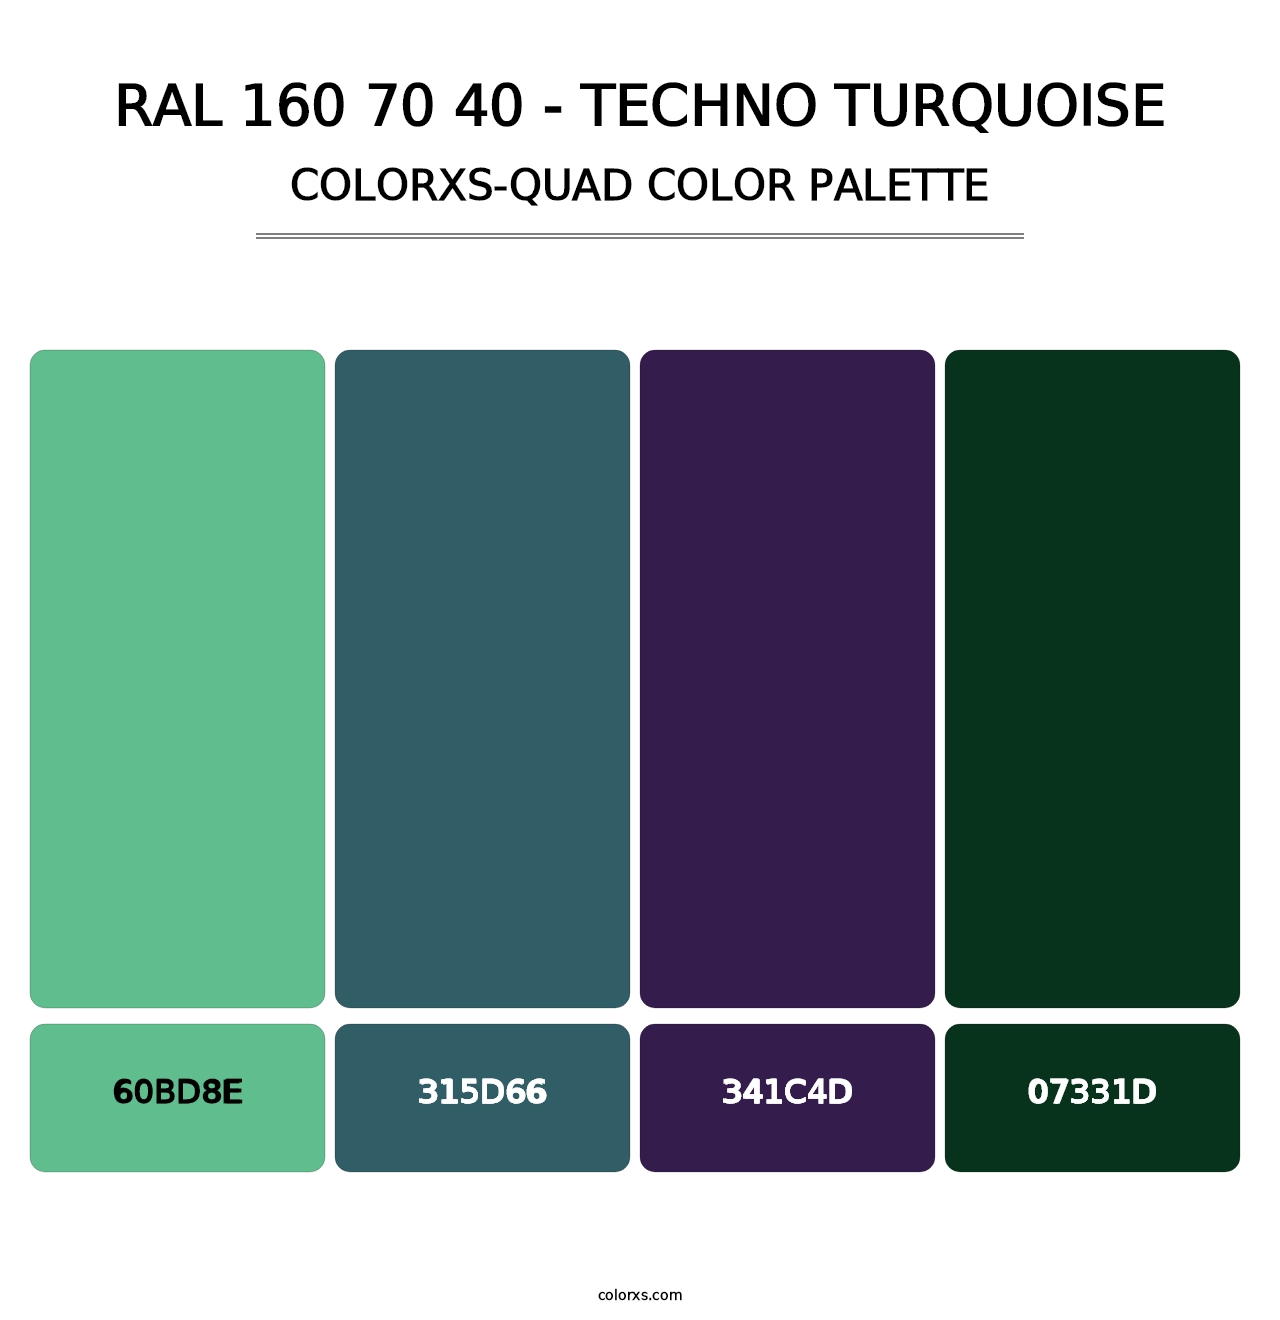 RAL 160 70 40 - Techno Turquoise - Colorxs Quad Palette